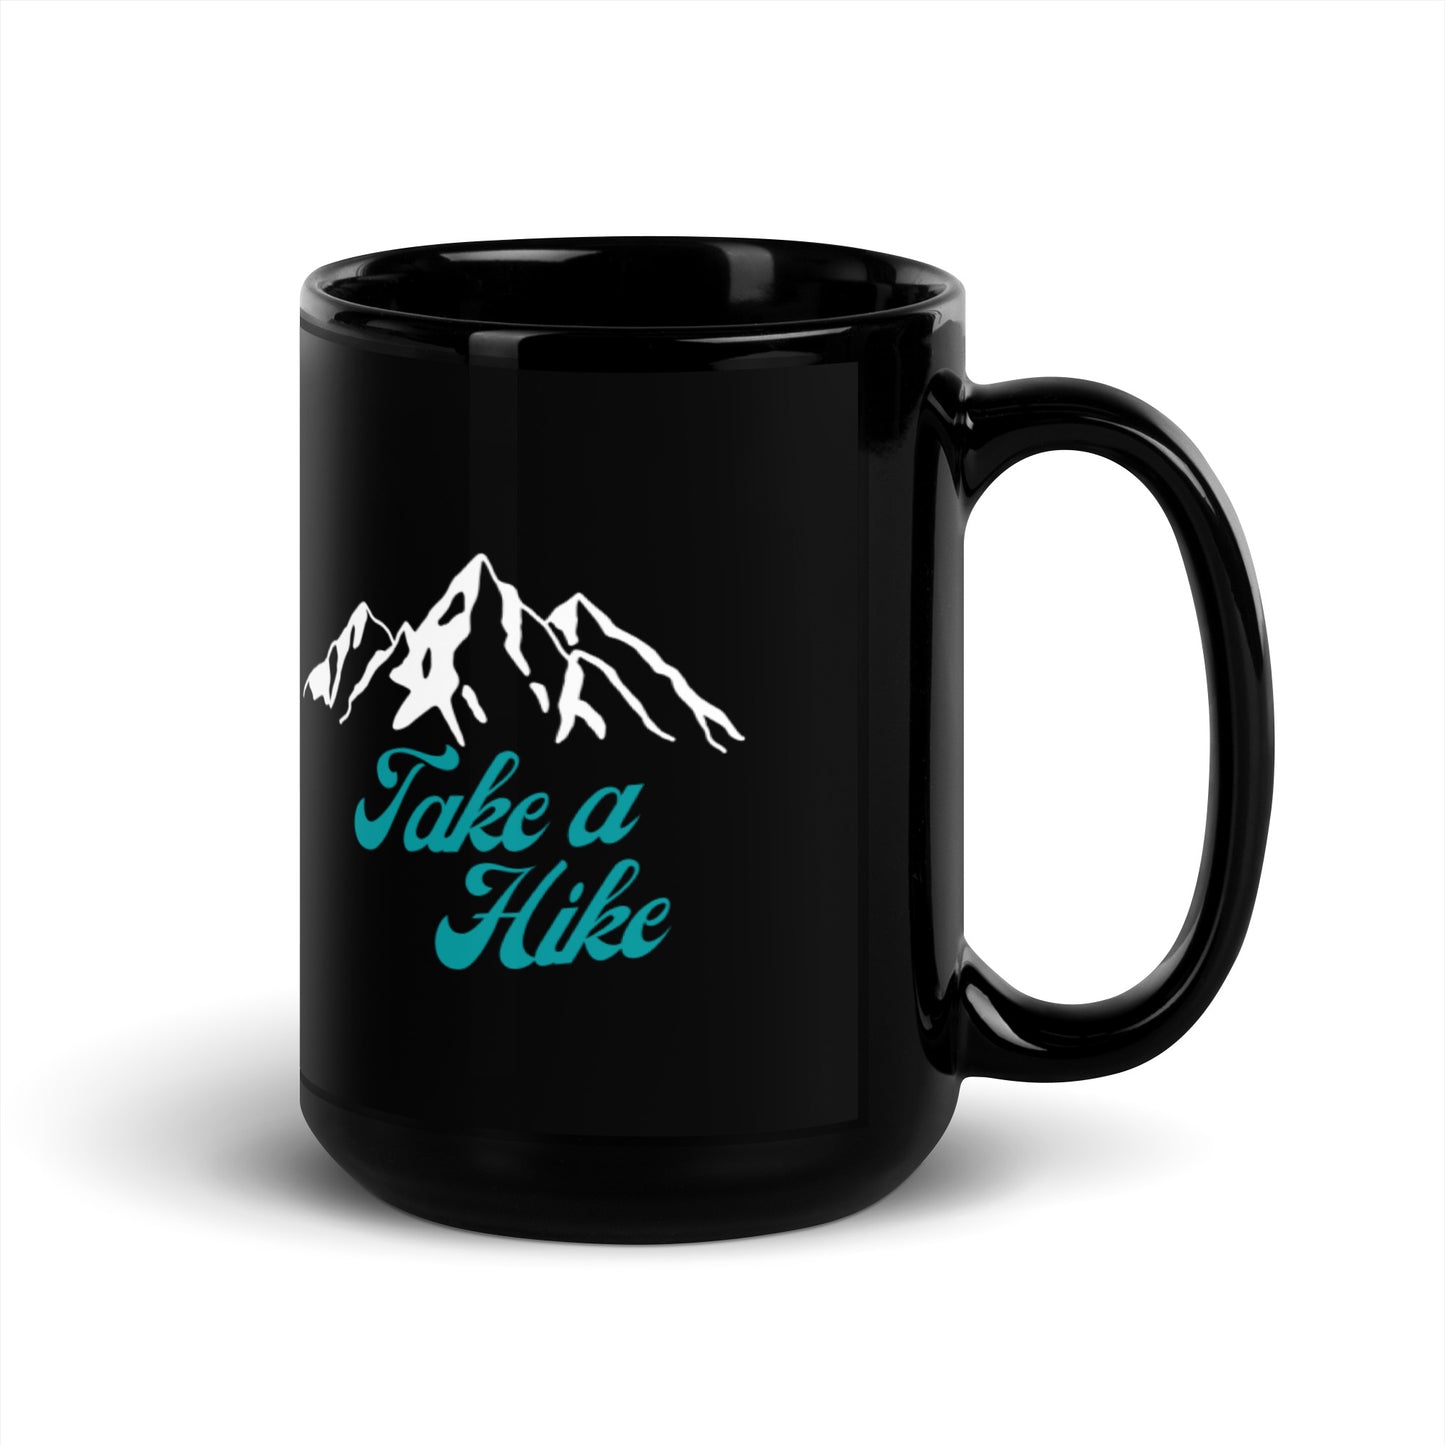 Take a hike - Black Glossy Mug - 15oz